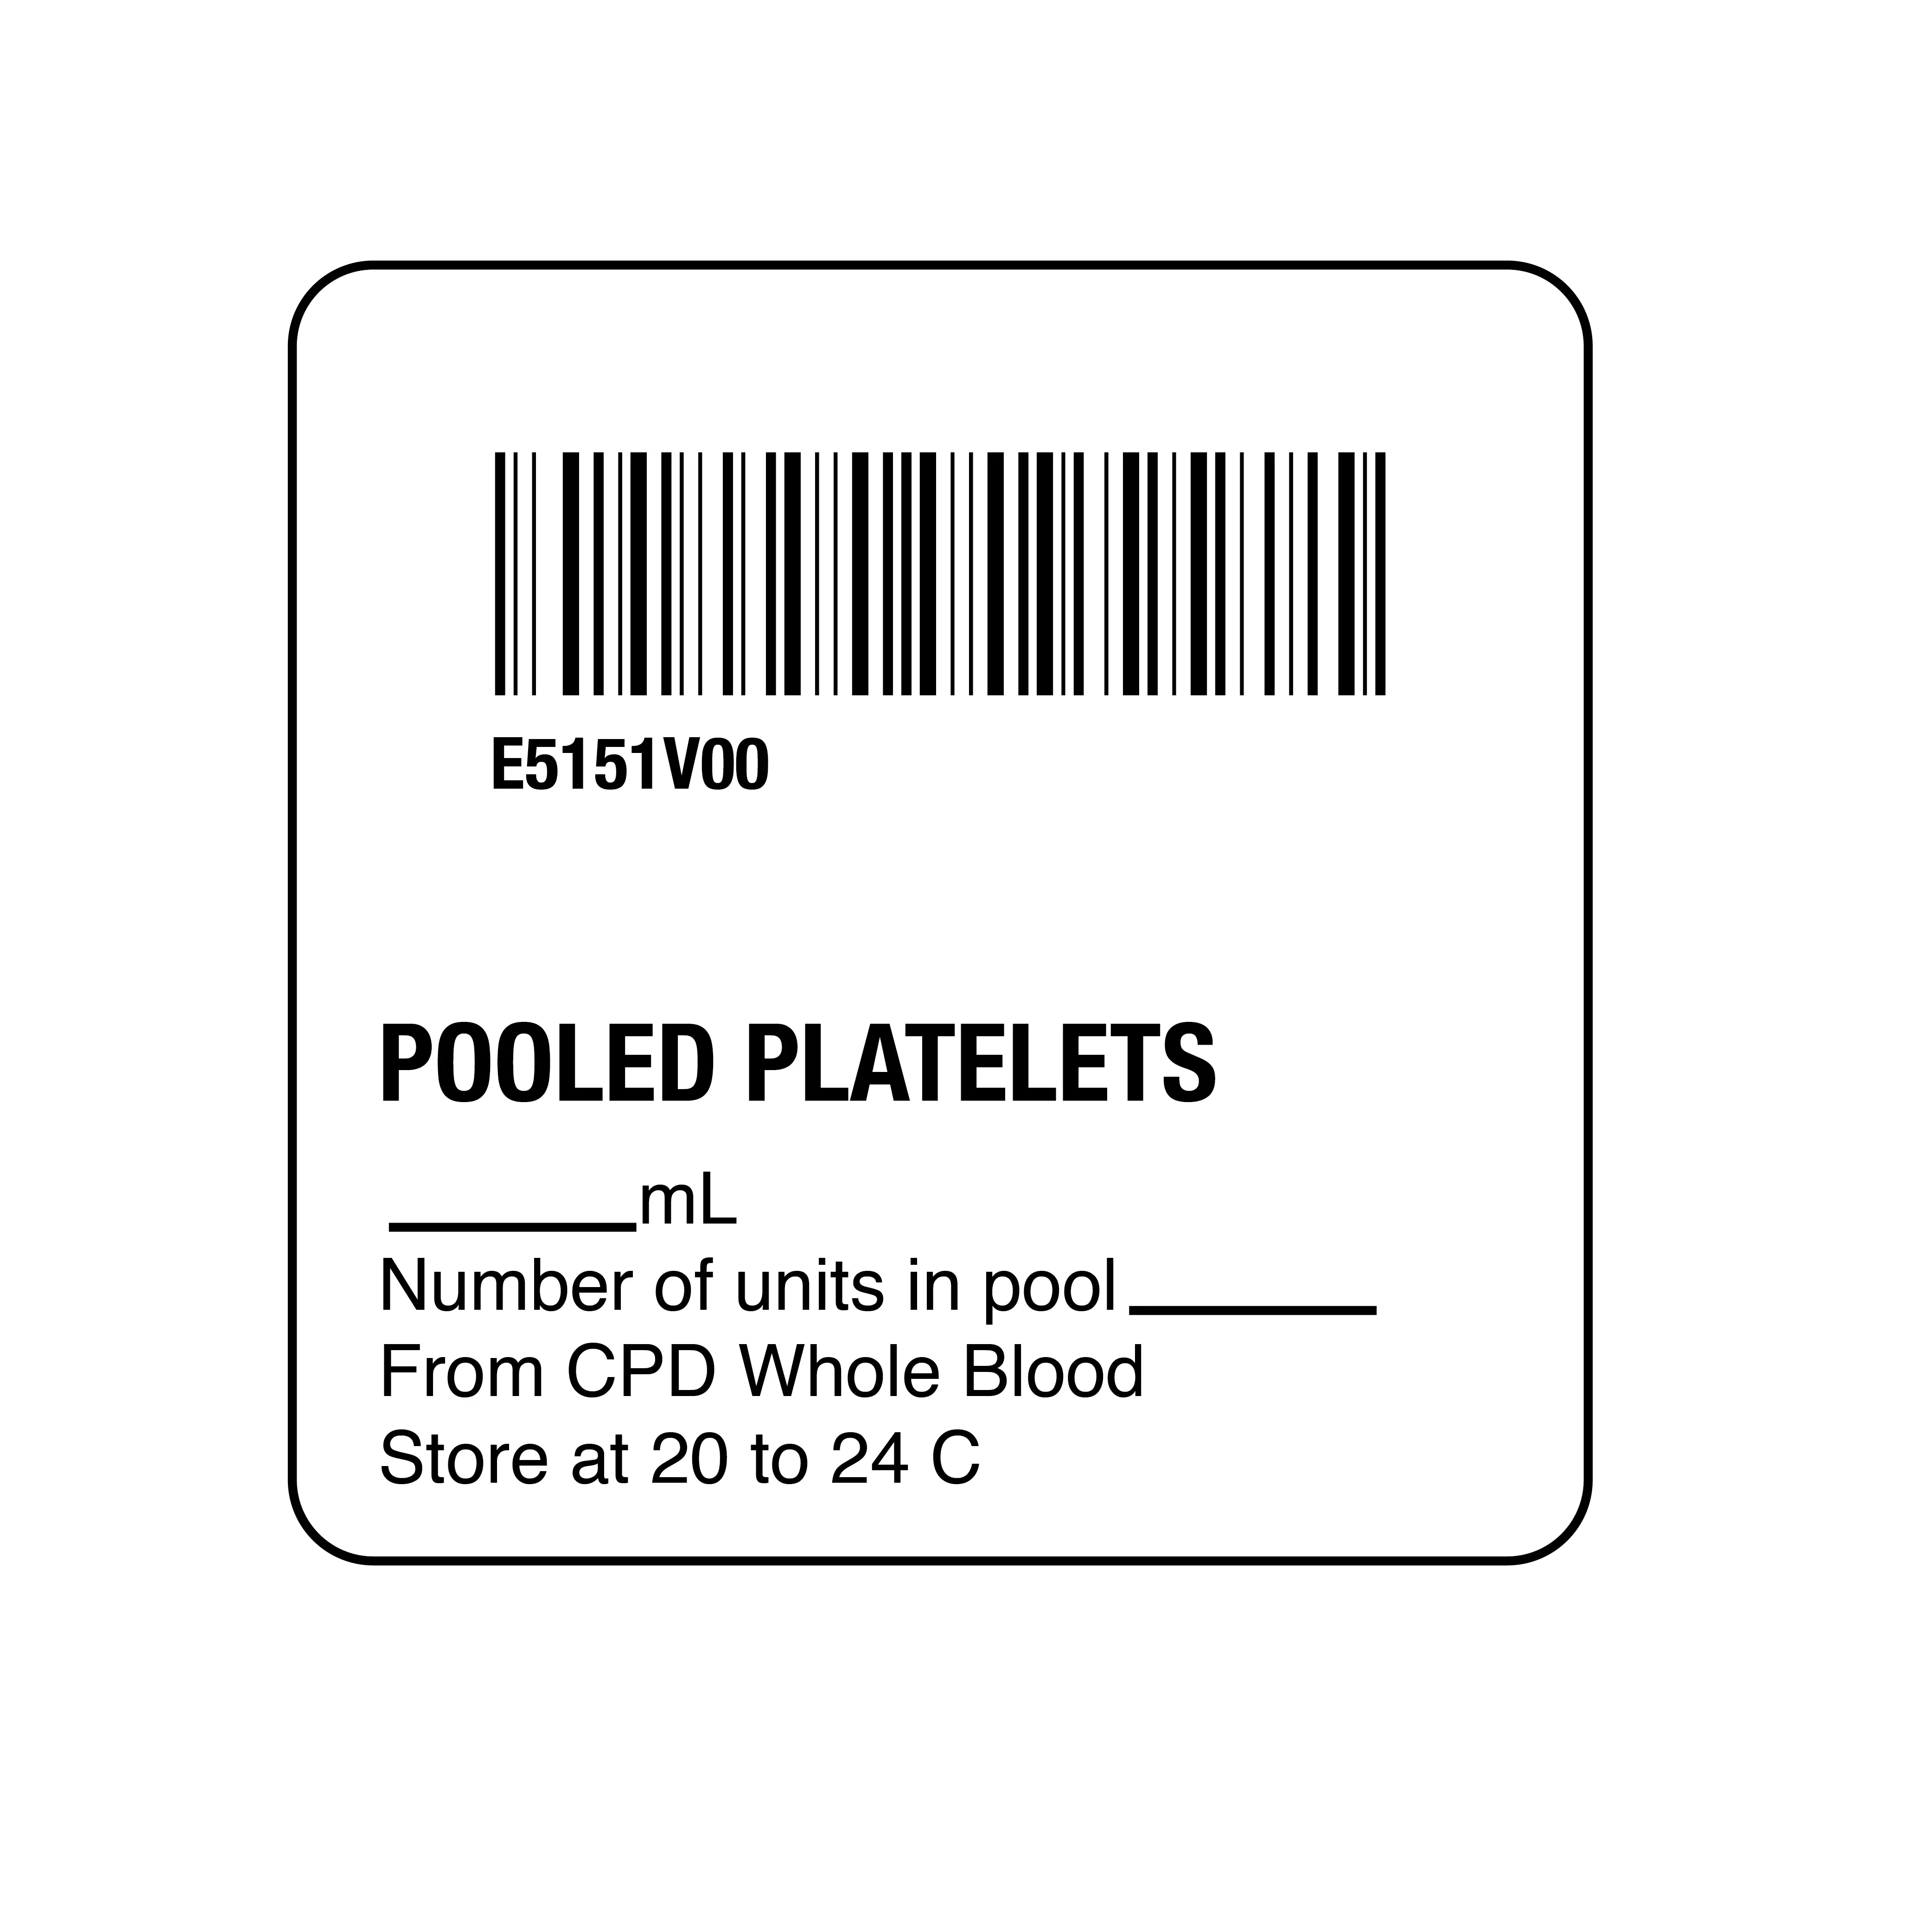 ISBT 128 Pooled Platelets